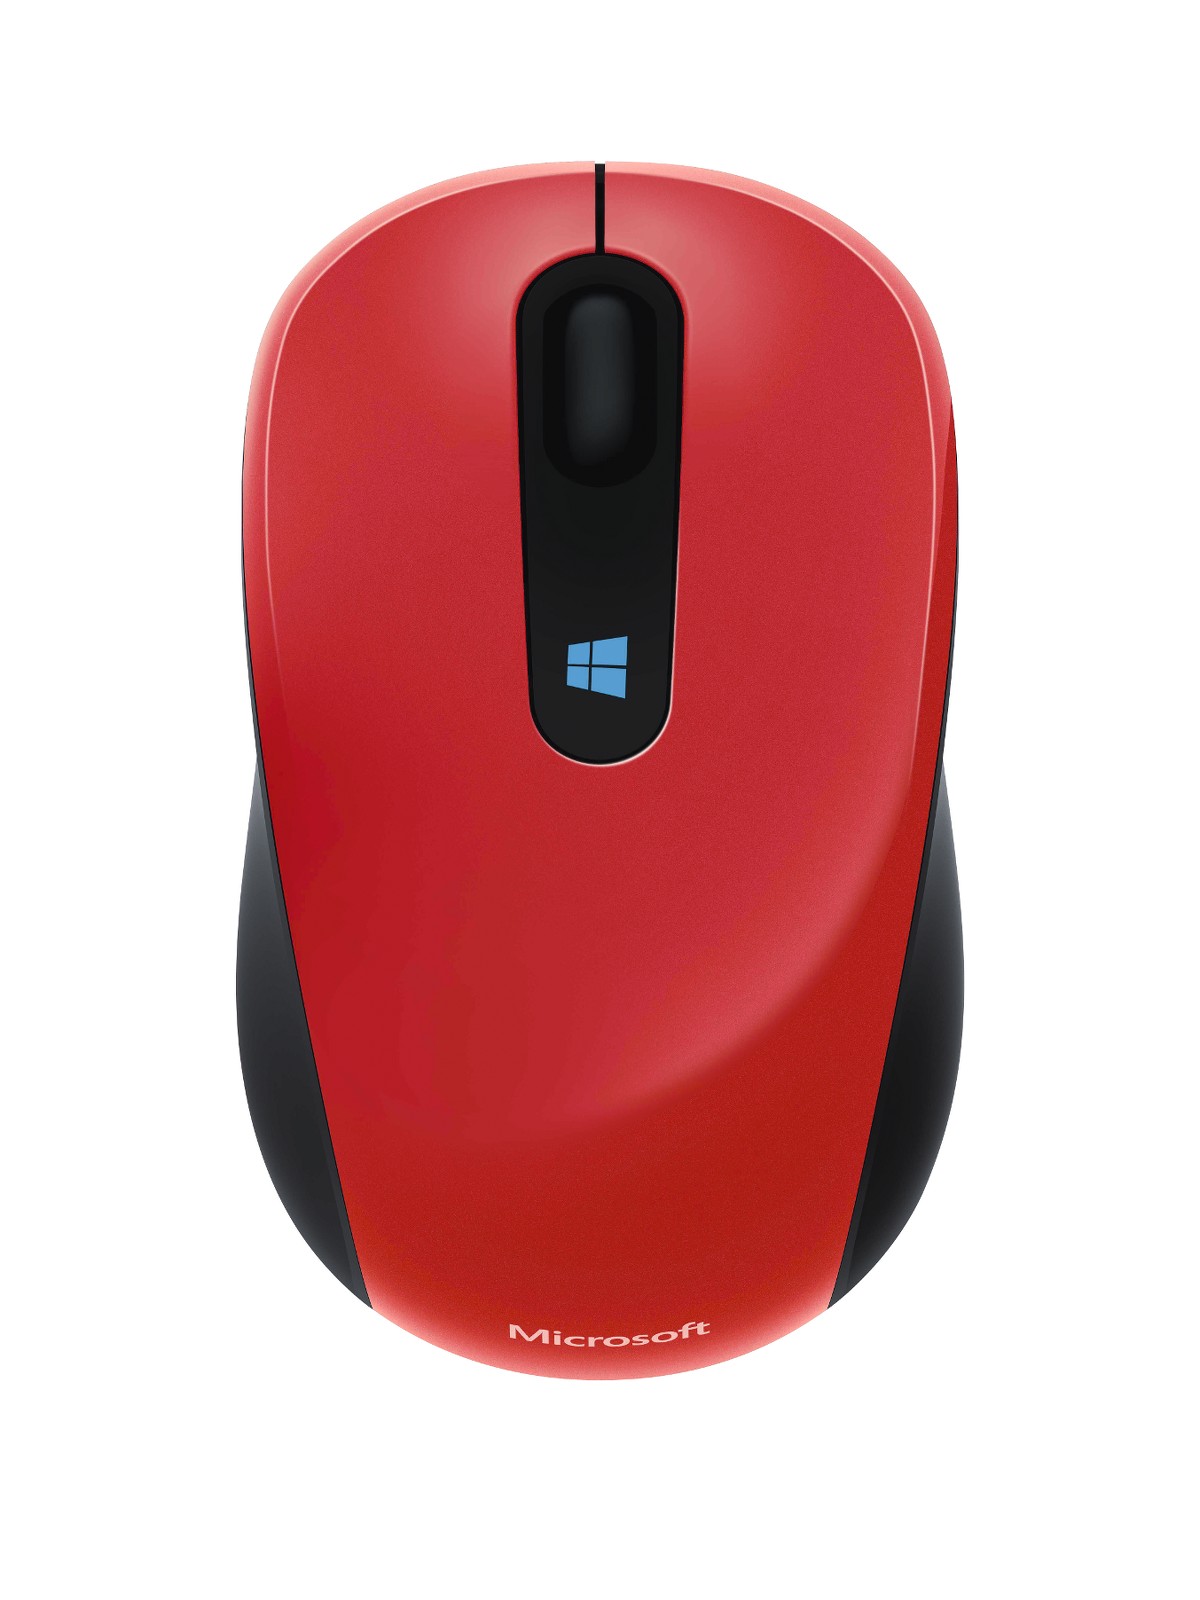 Mouse Microsoft Sculpt Mobile fara fir, rosu